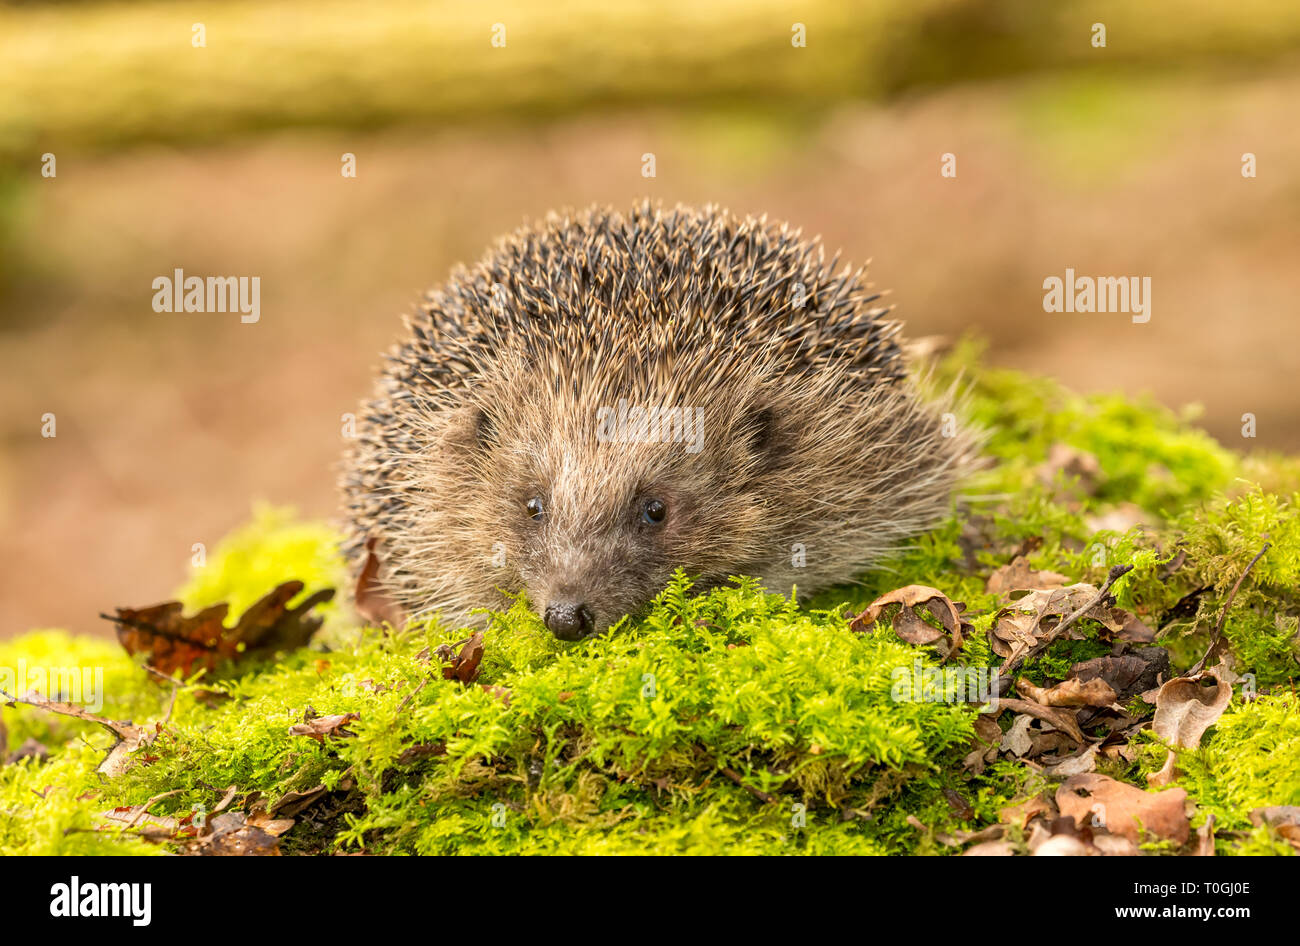 Hedgehog, (Erinaceus Europaeus) Wild, native, European hedgehog in natural woodland habitat with green moss and blurred background. Landscape Stock Photo